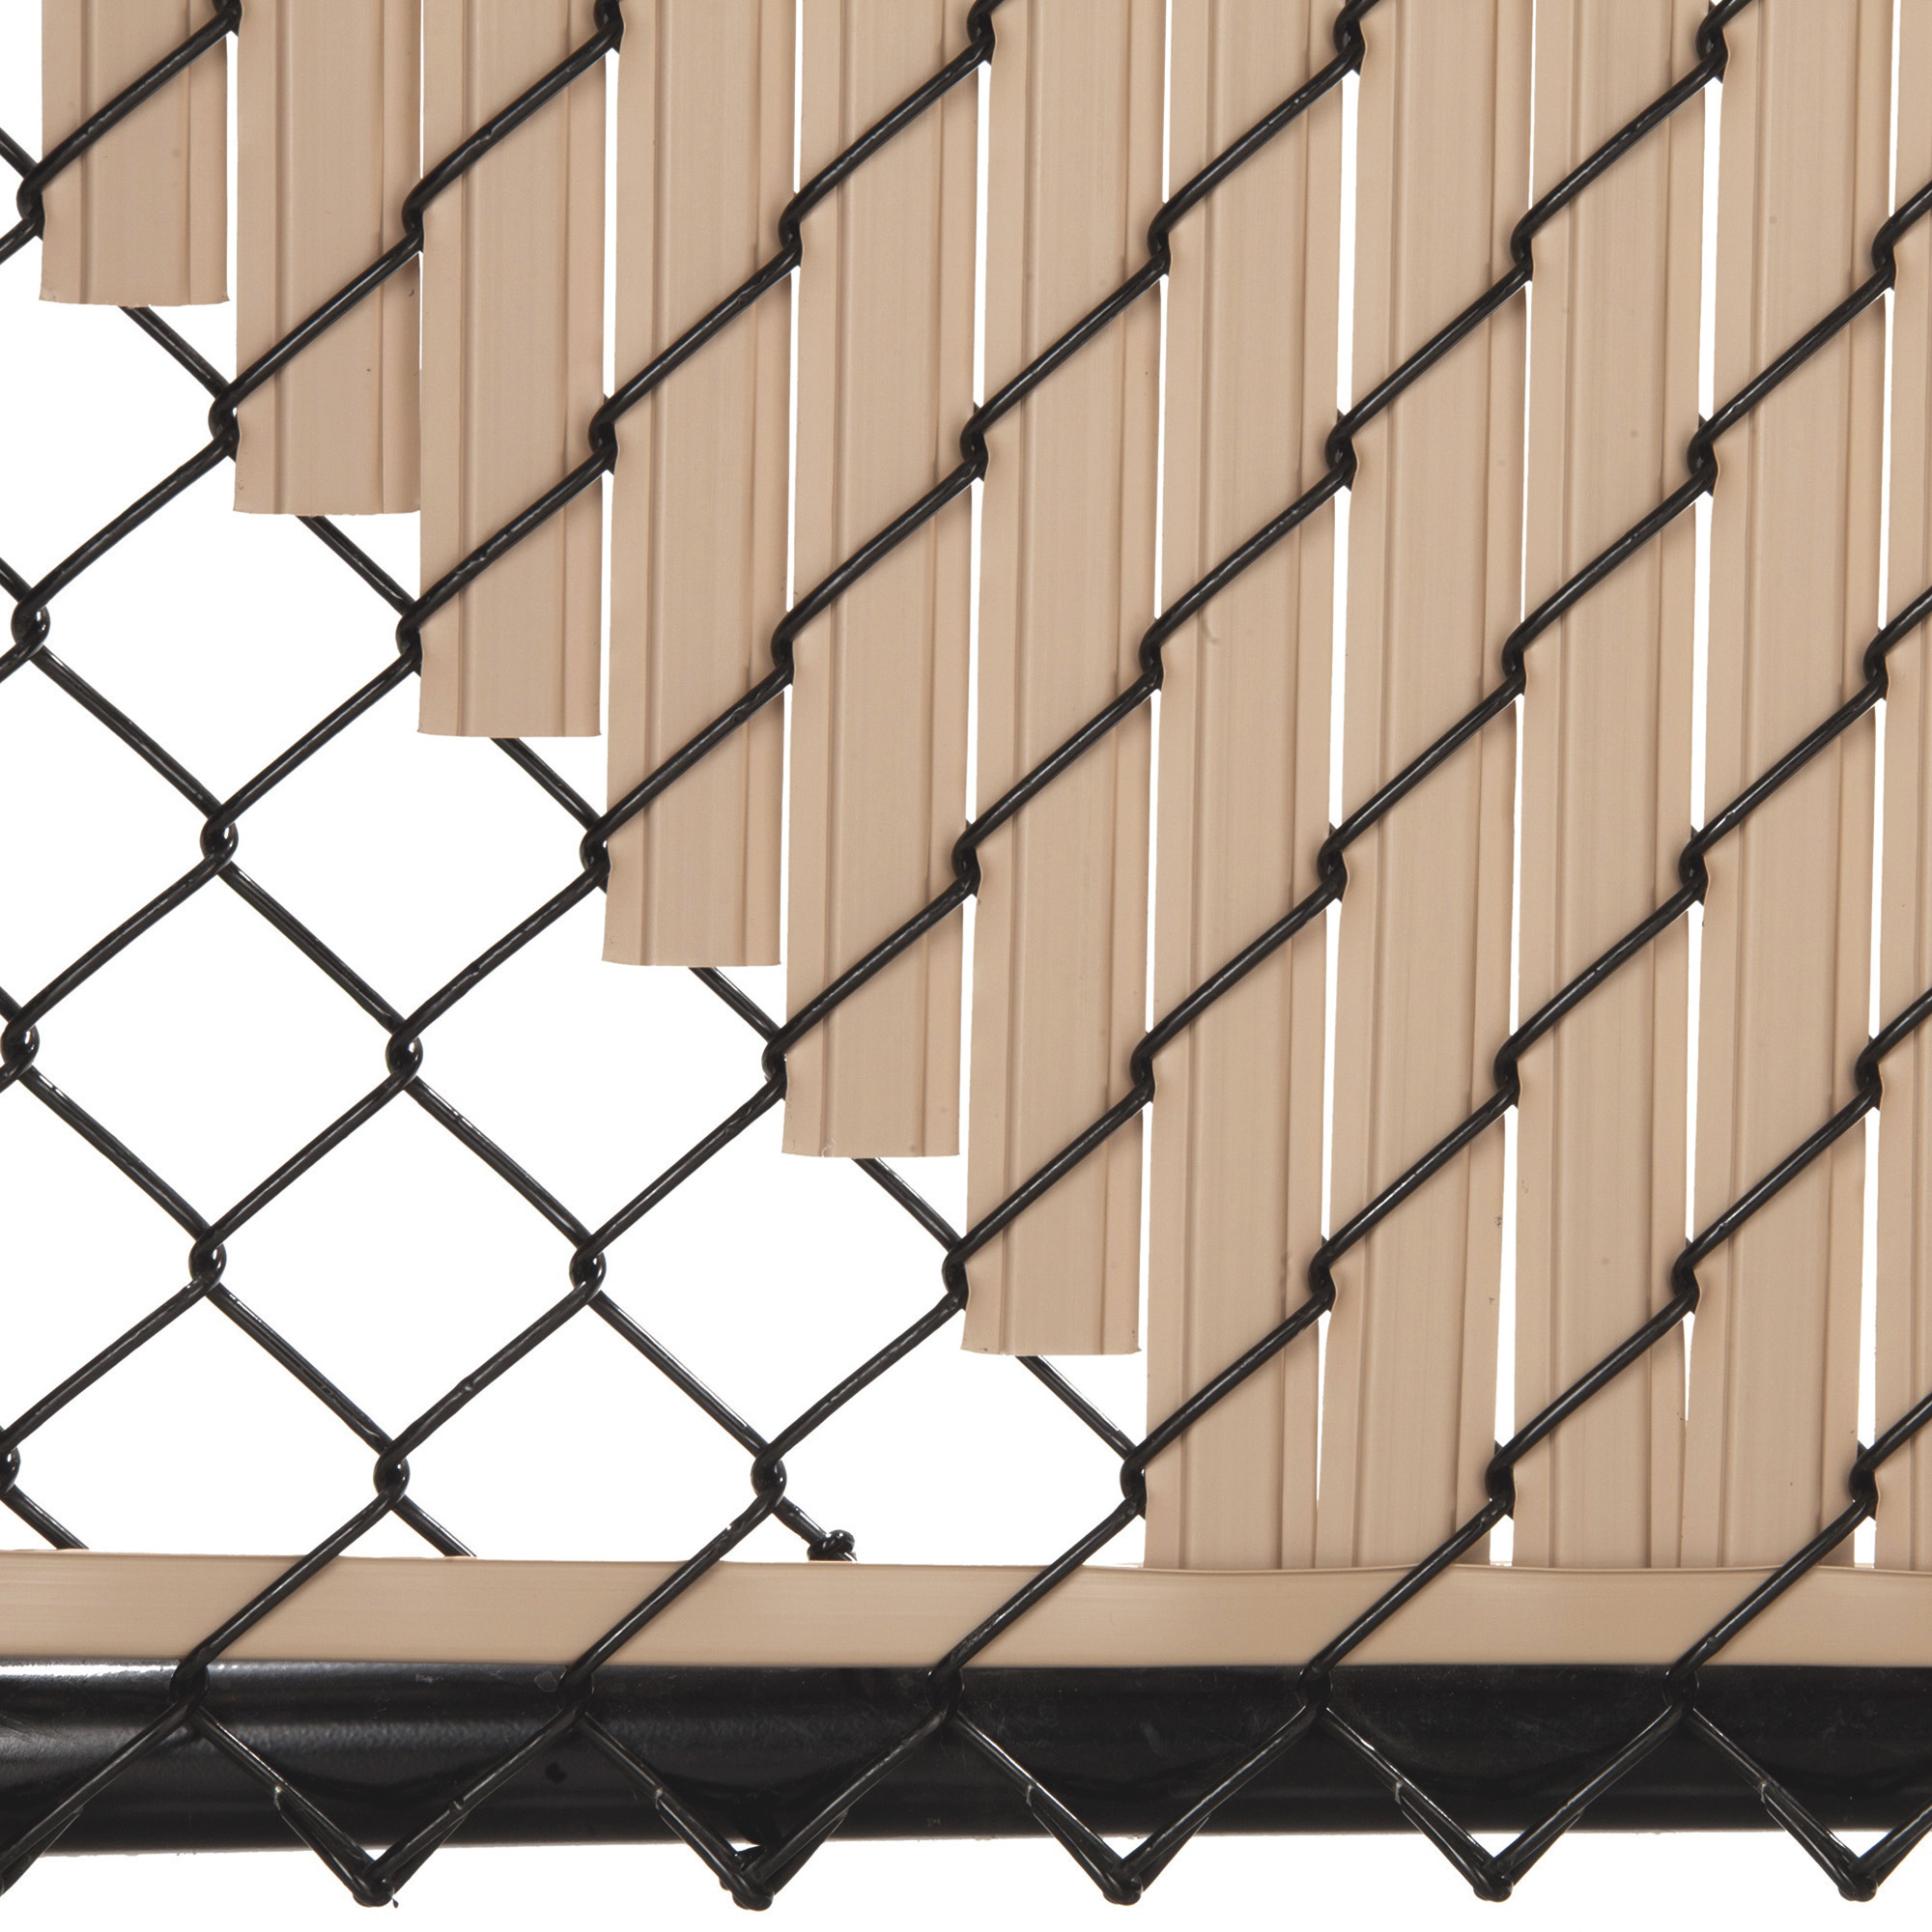 SoliTube Slats Chain Link Fence Privacy Slats â Beige, 82 Slats, Model SS5BG